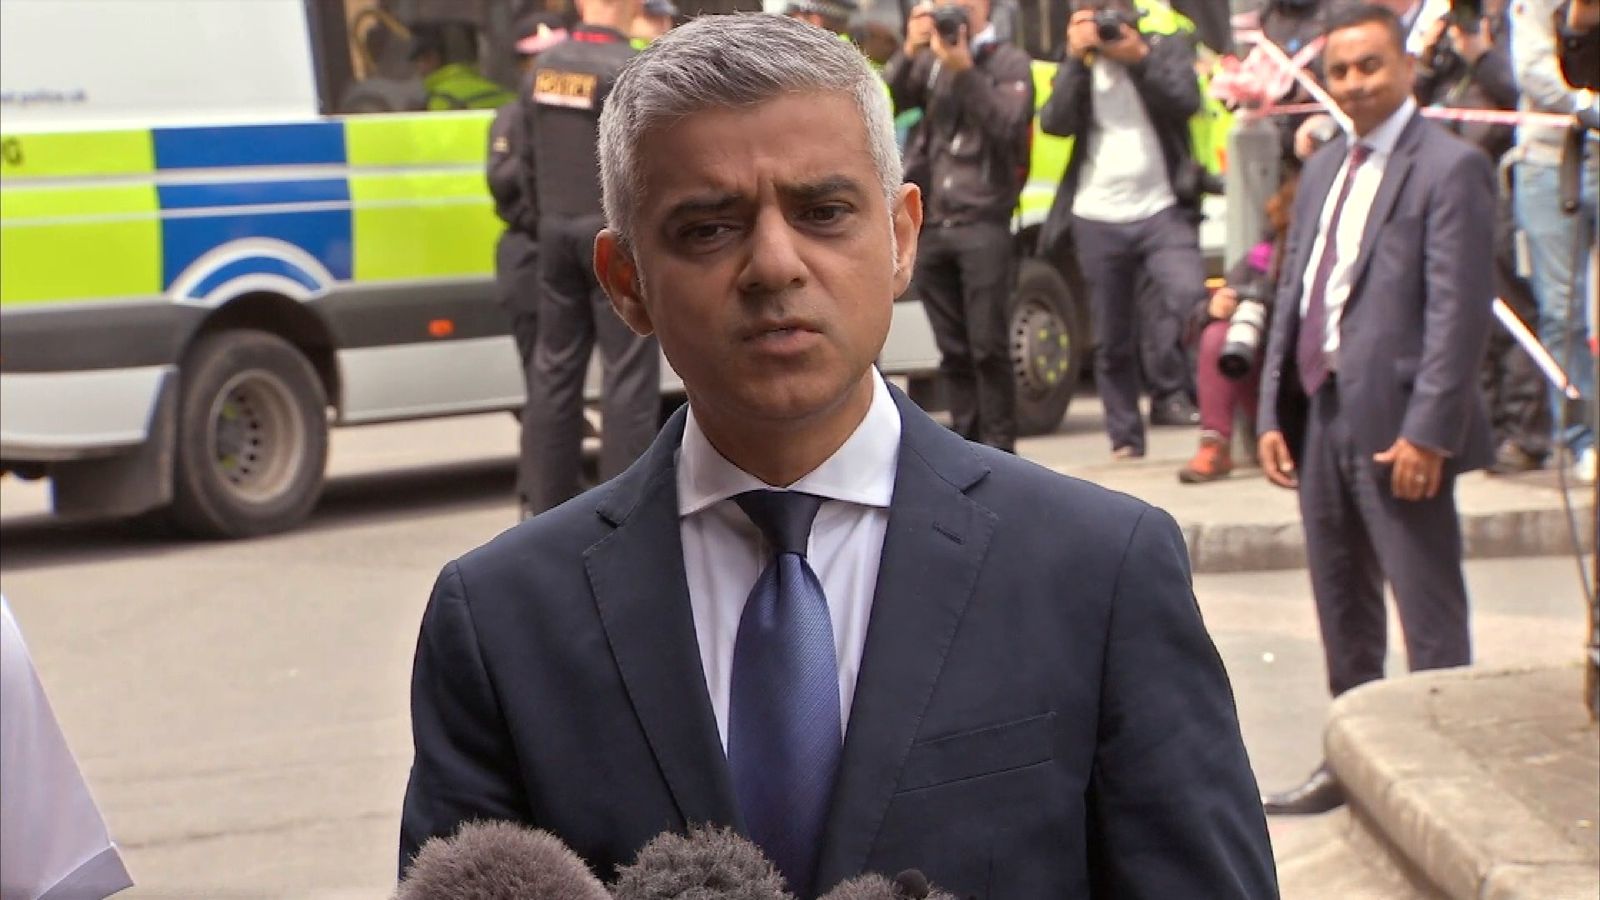 Police identify two men behind London terrorist attacks